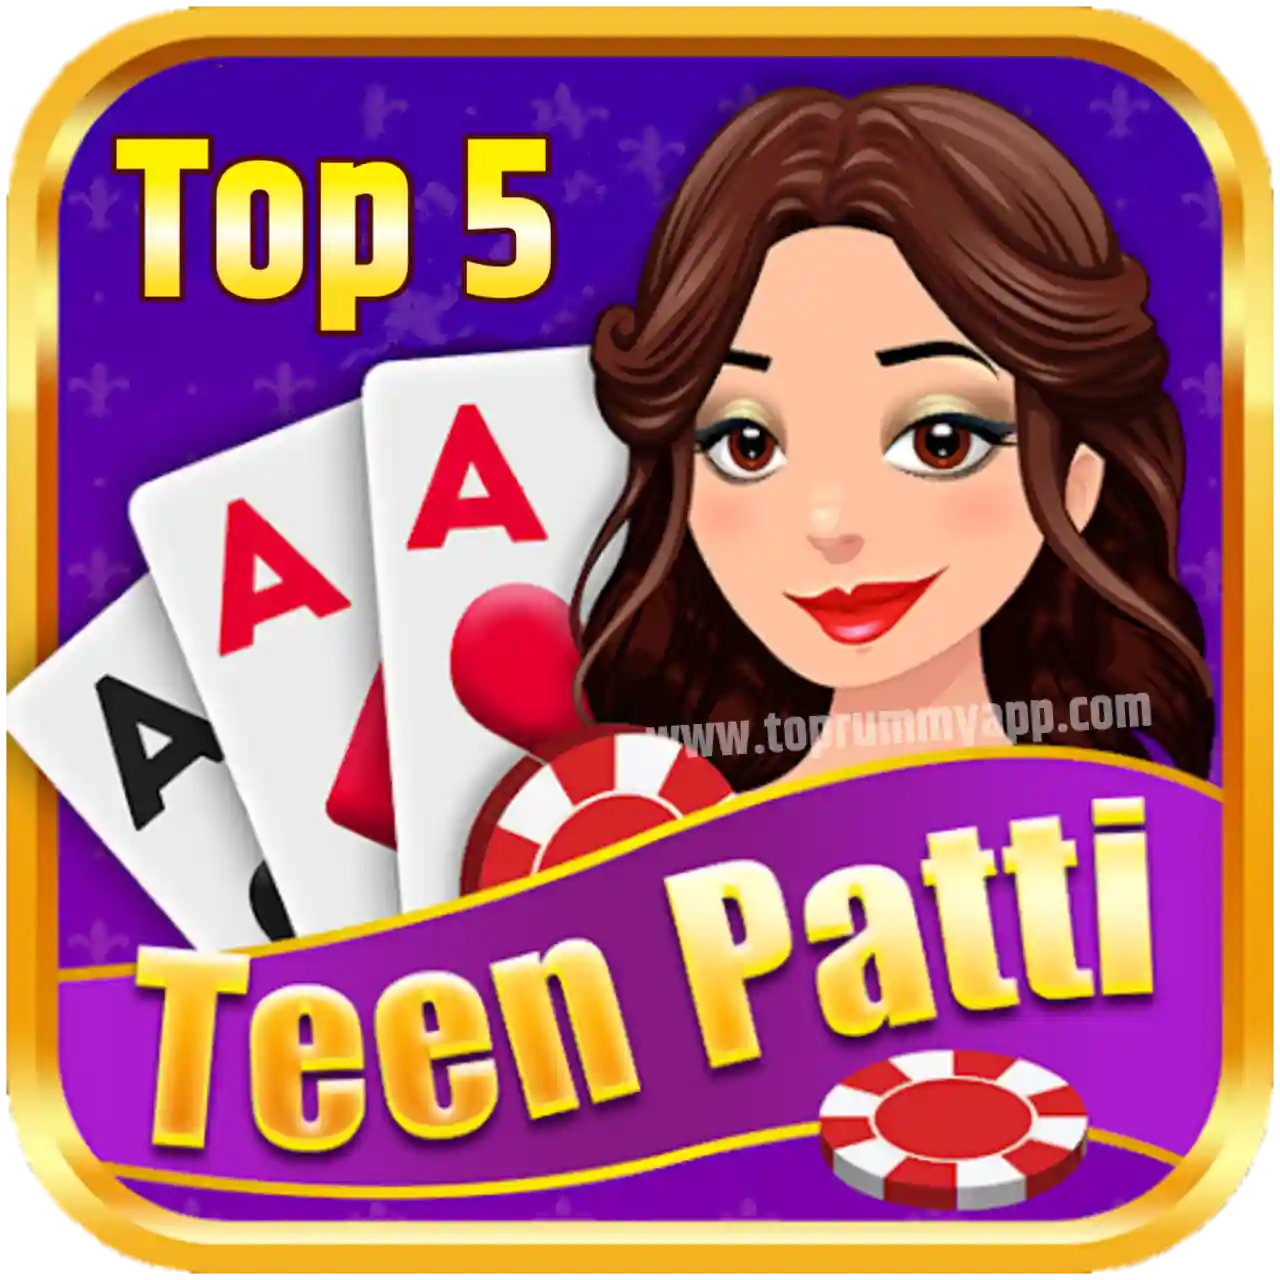 Top 5 Teen Patti App List - Top 5 Teen Patti App List 41 Bonus